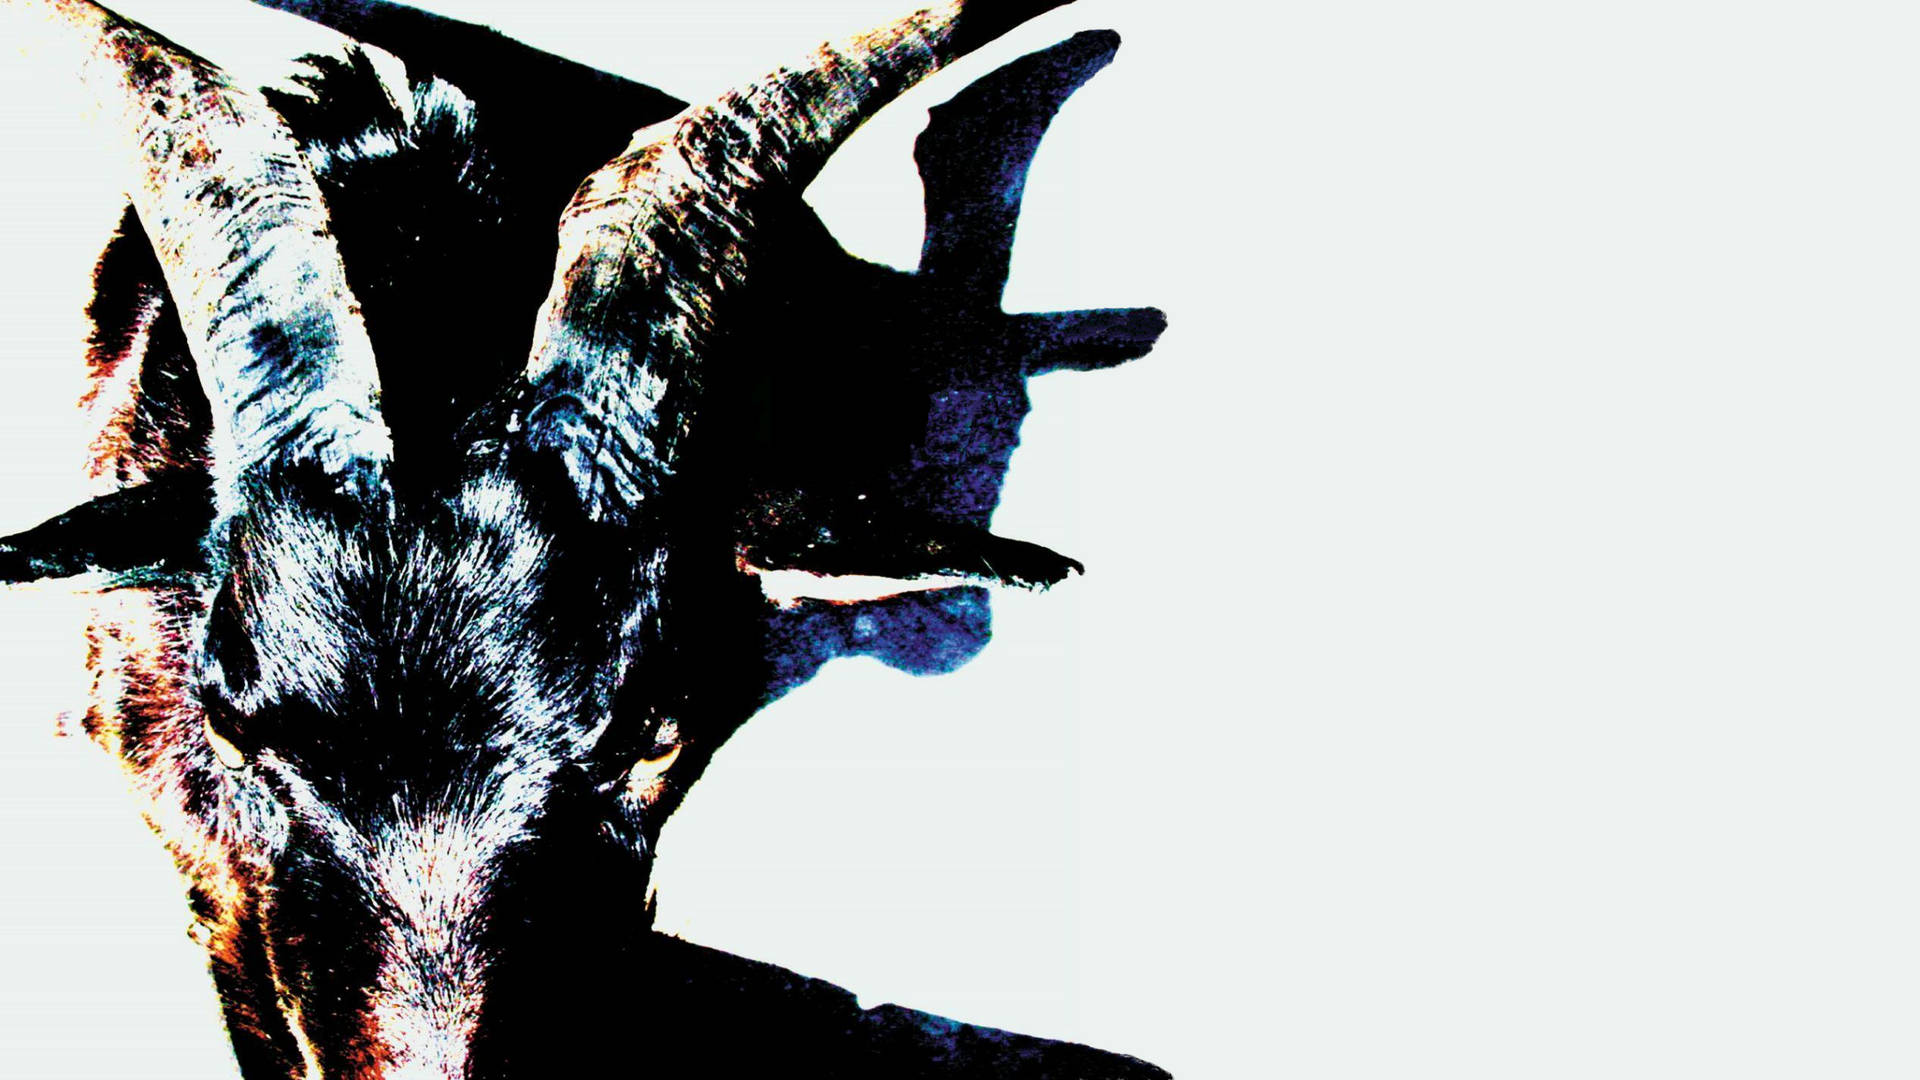 Slipknot Lowa Goat Album Cover Background